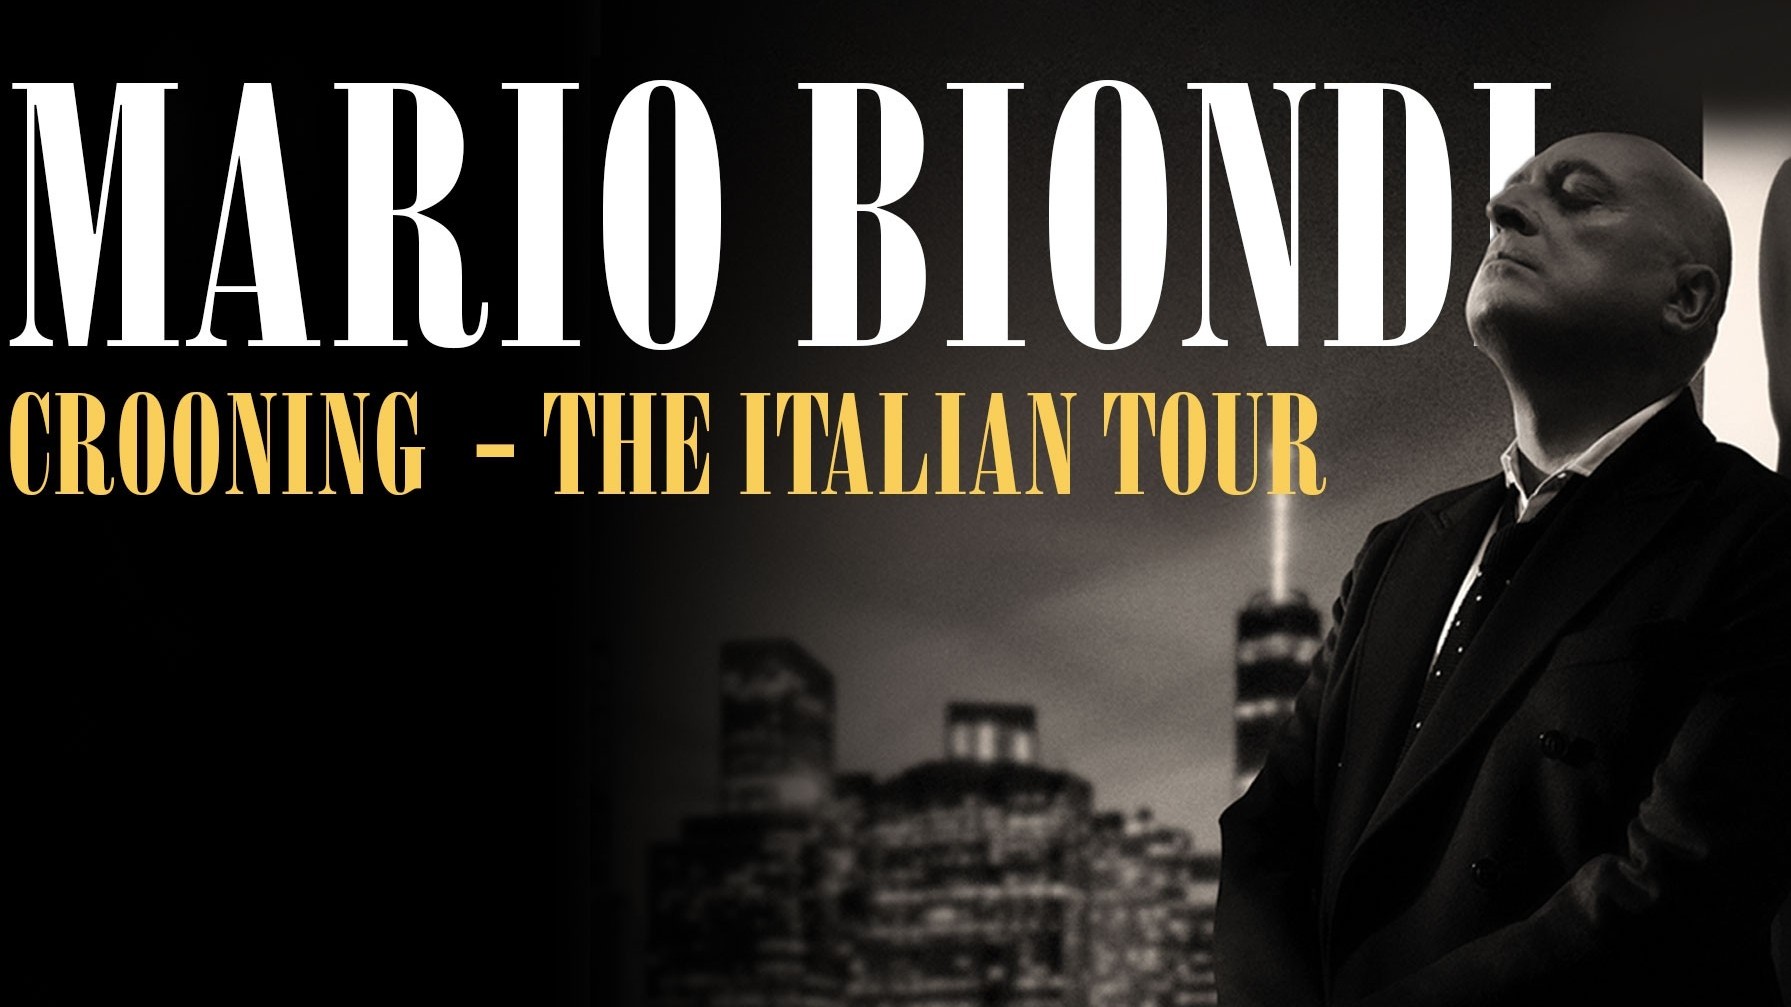 Mario Biondi "Crooning - The Italian Tour"